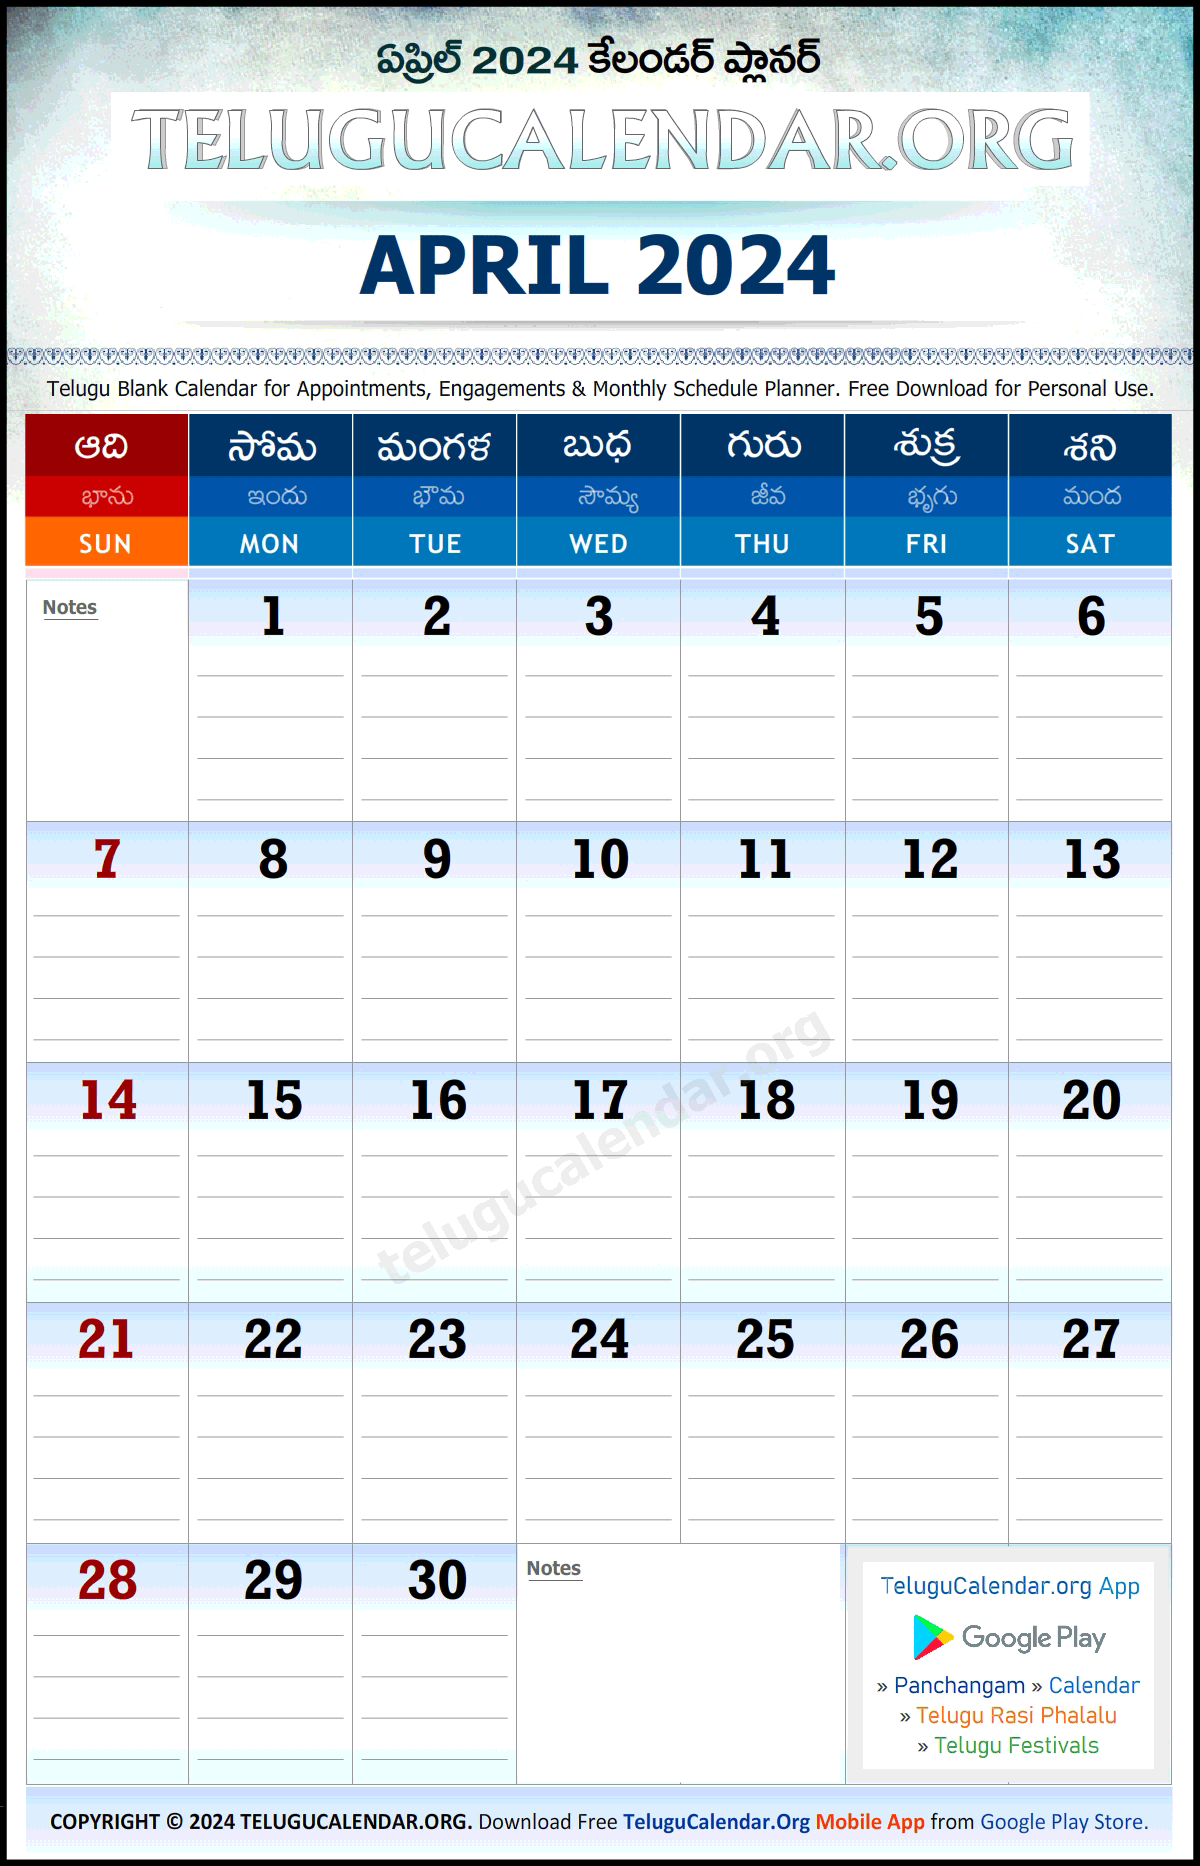 Telugu Planner 2024 April Calendar Monthly Pdf Download regarding April Telugu Calendar 2024